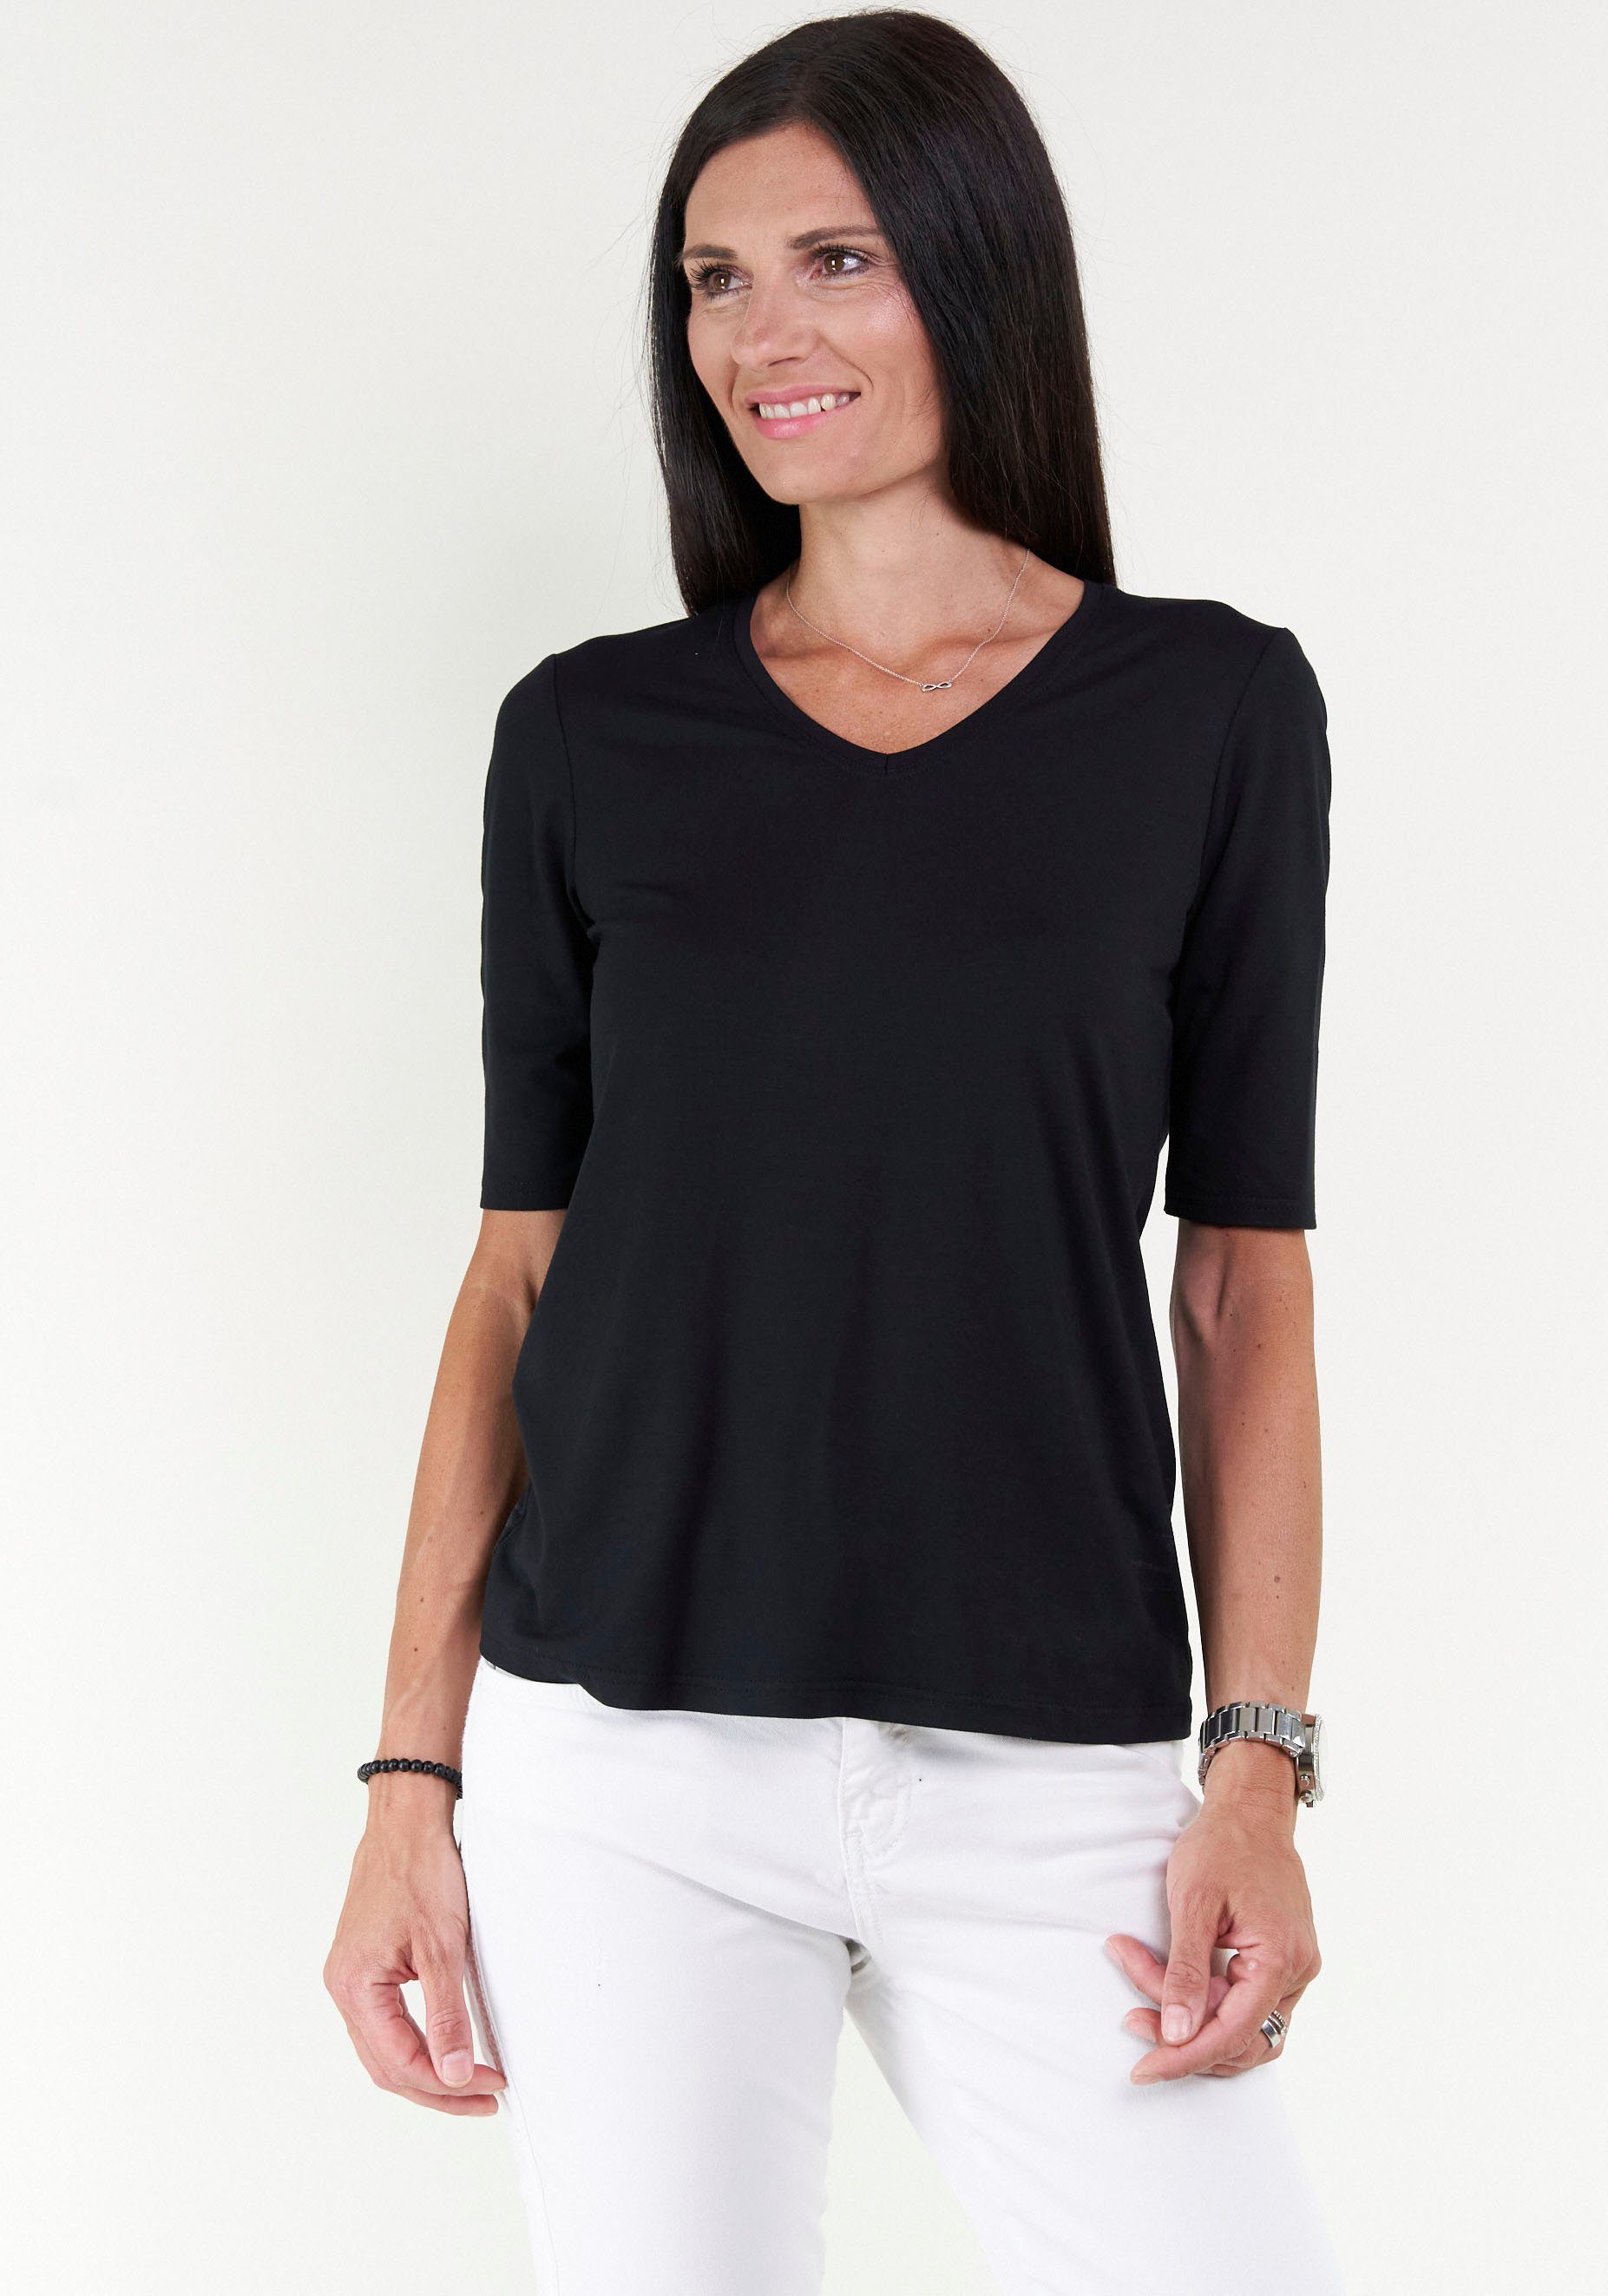 Seidel Moden V-Shirt mit Halbarm aus schwarz GERMANY Material, softem IN MADE